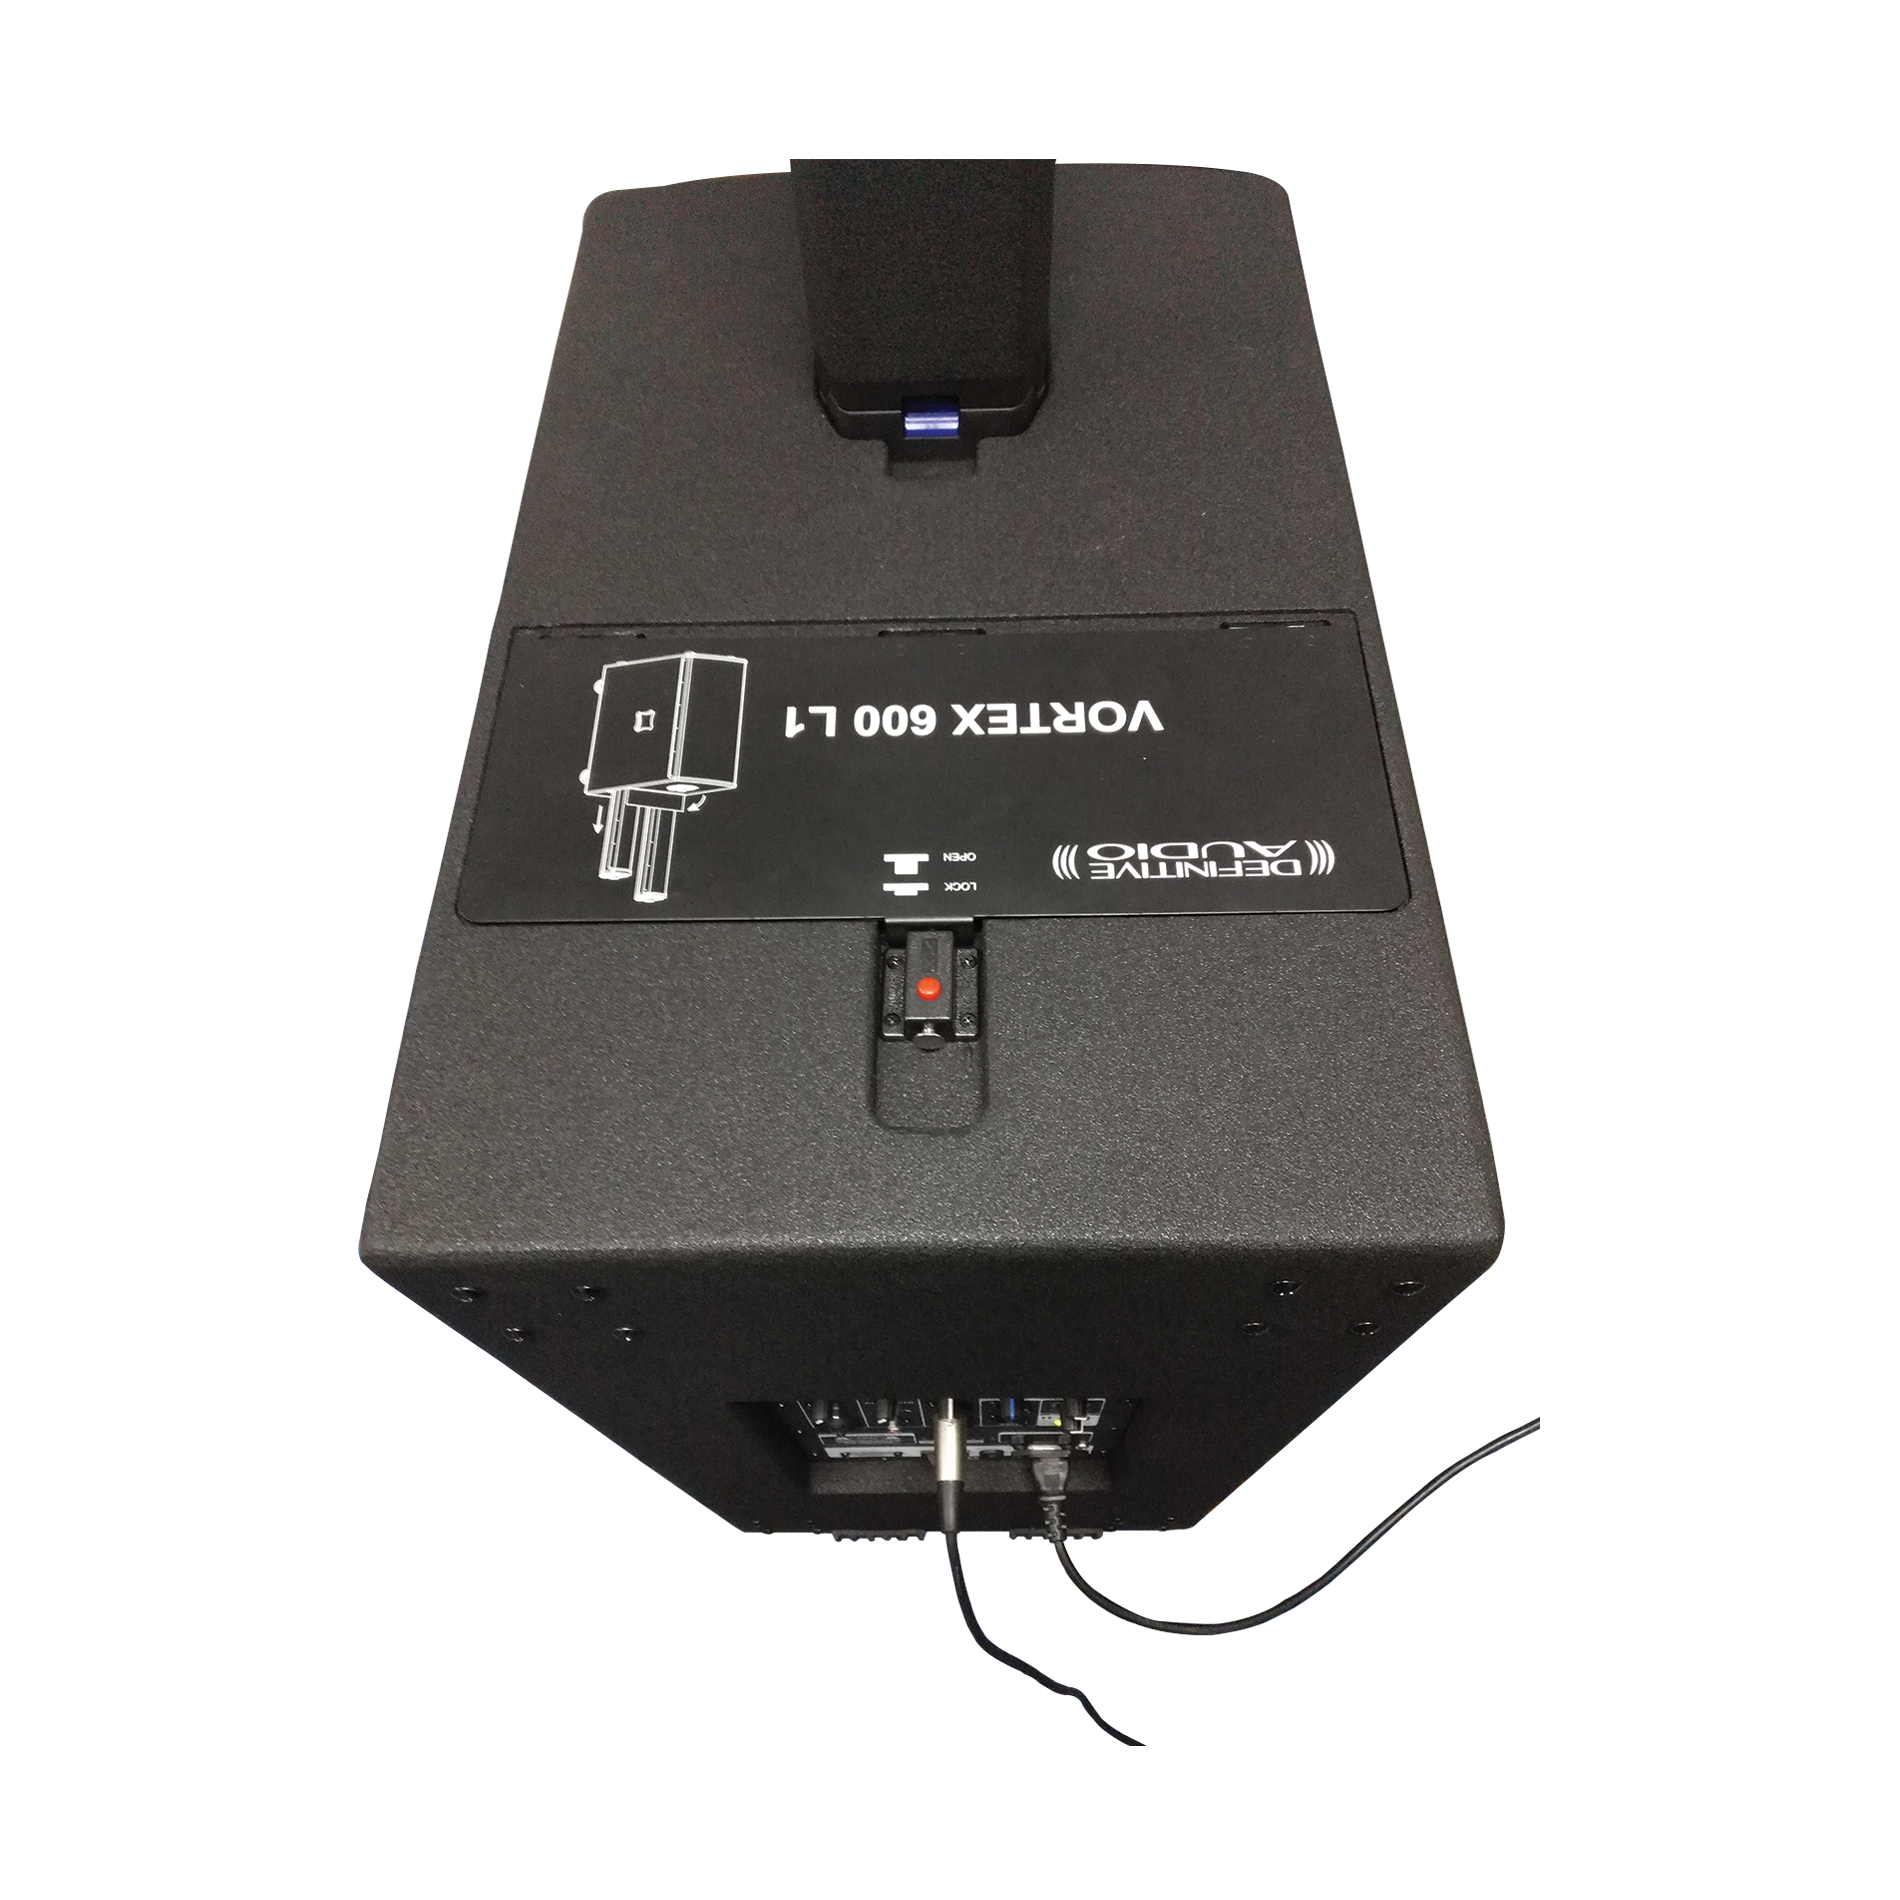 Definitive Audio Vortex 600 L1 - Systemes Colonnes - Variation 6